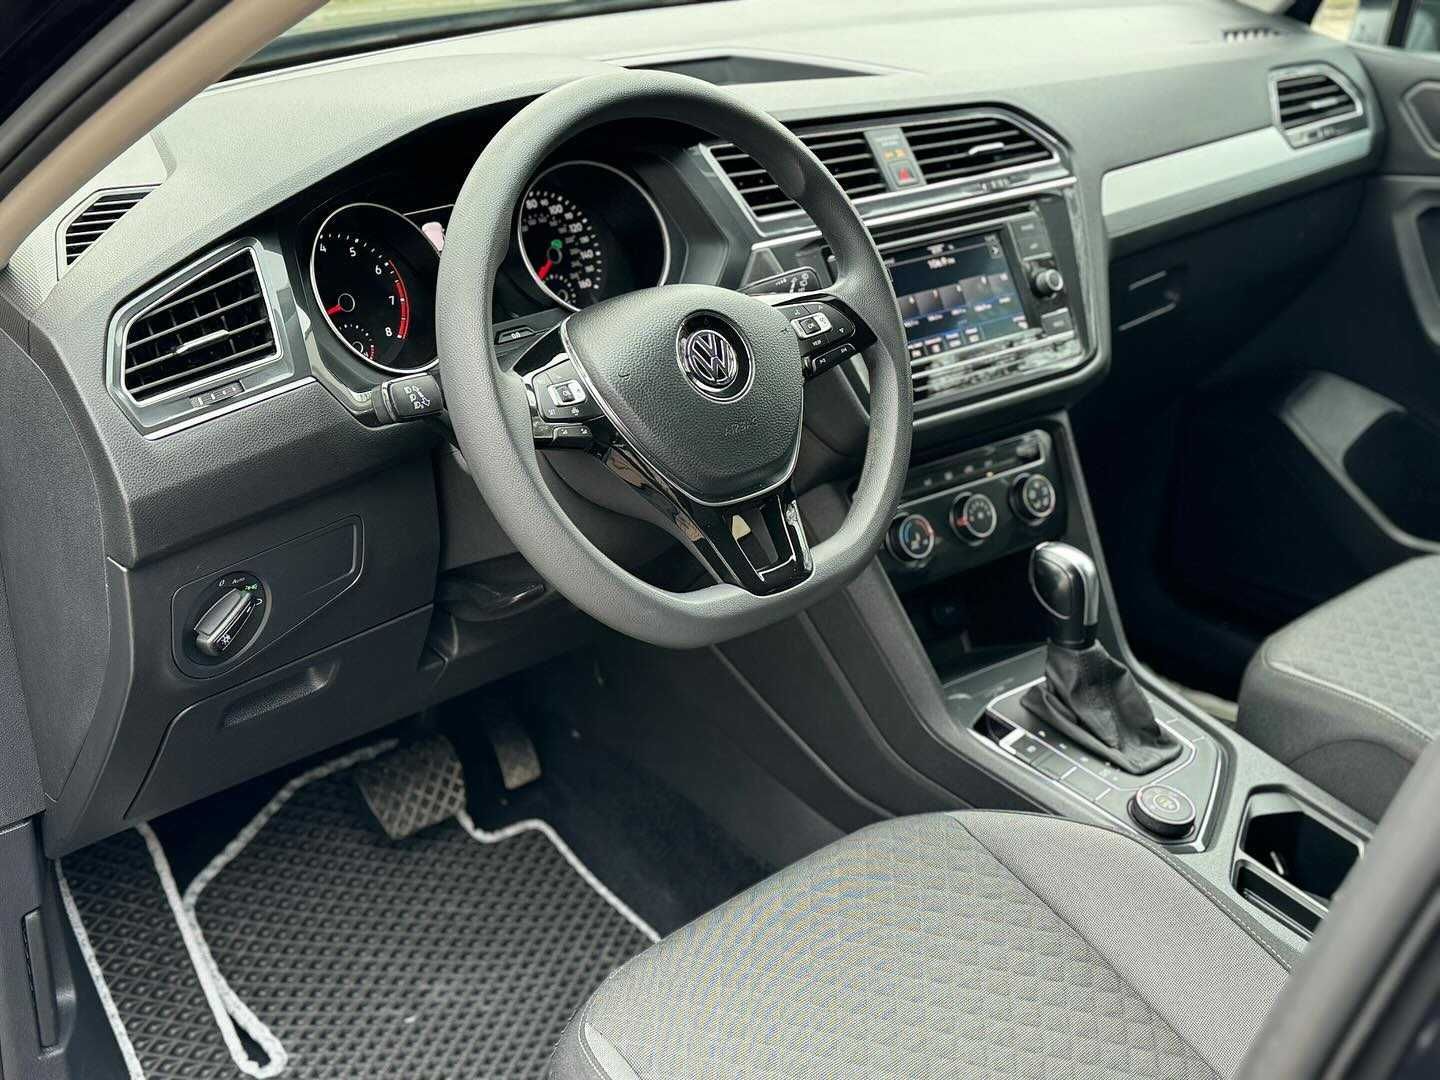 Продам Volkswagen Tiguan 2019р. Тігуан 2019р.